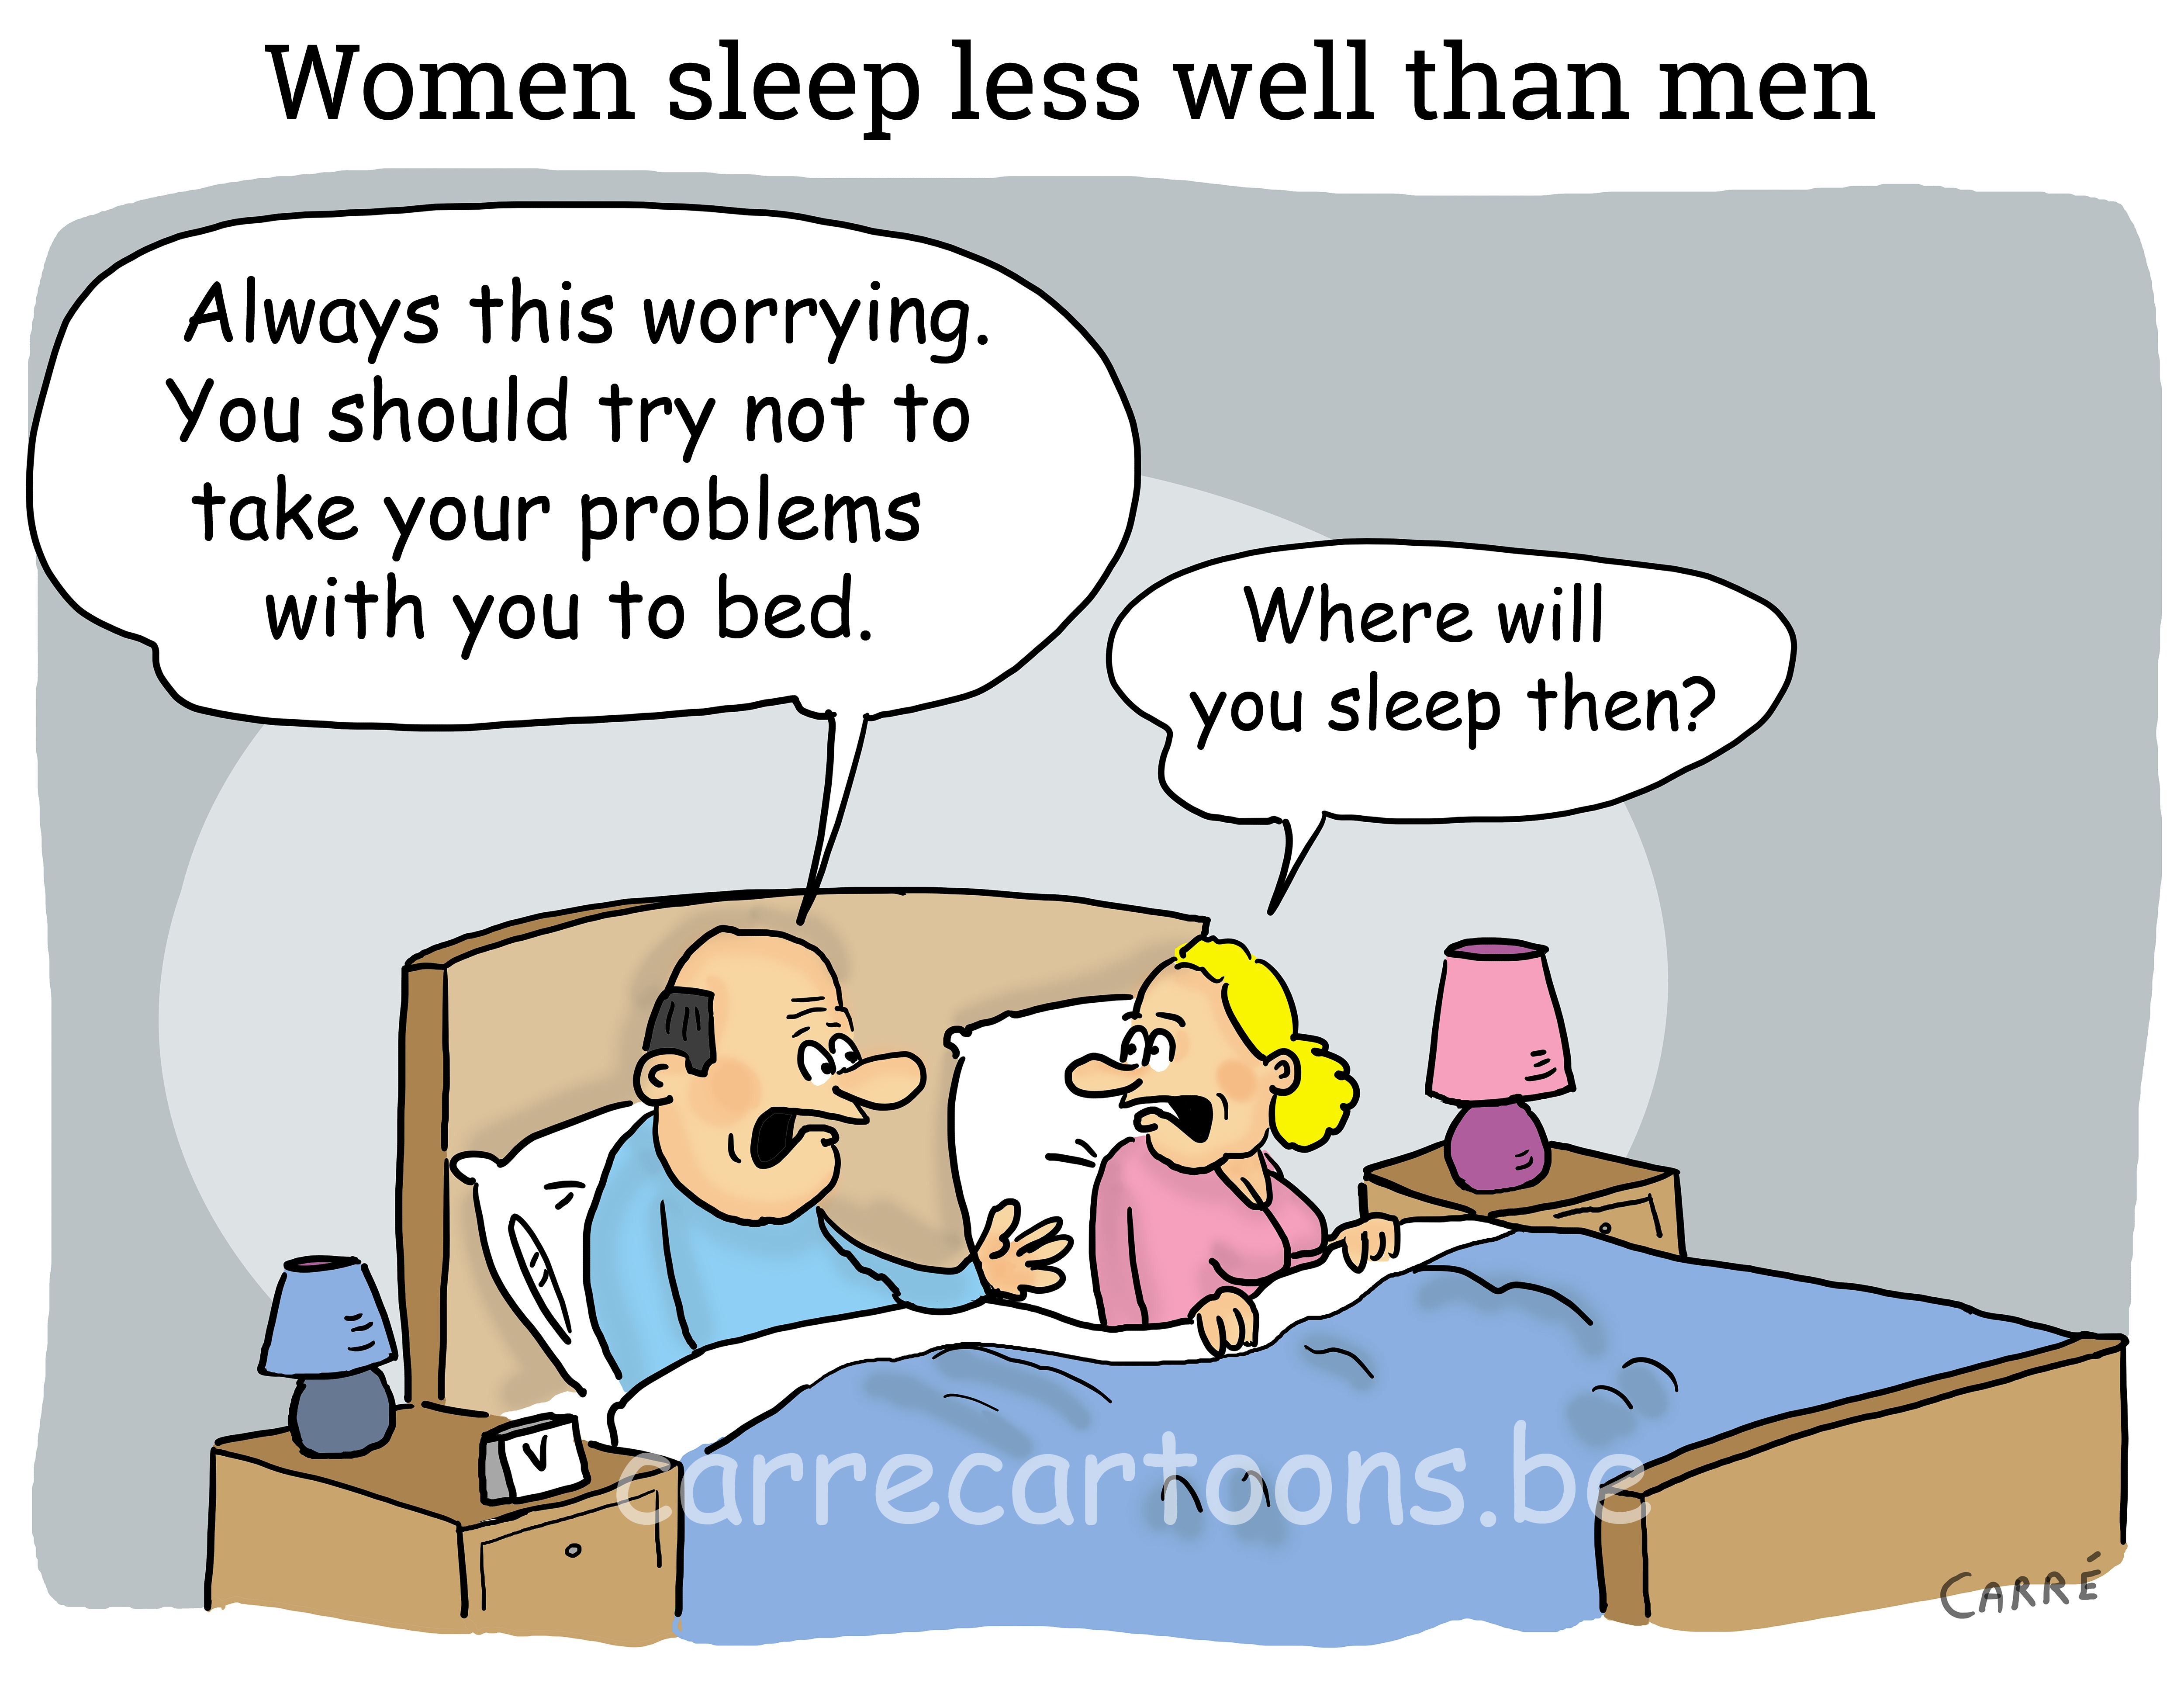 cs21 women sleep less wellwm.jpg